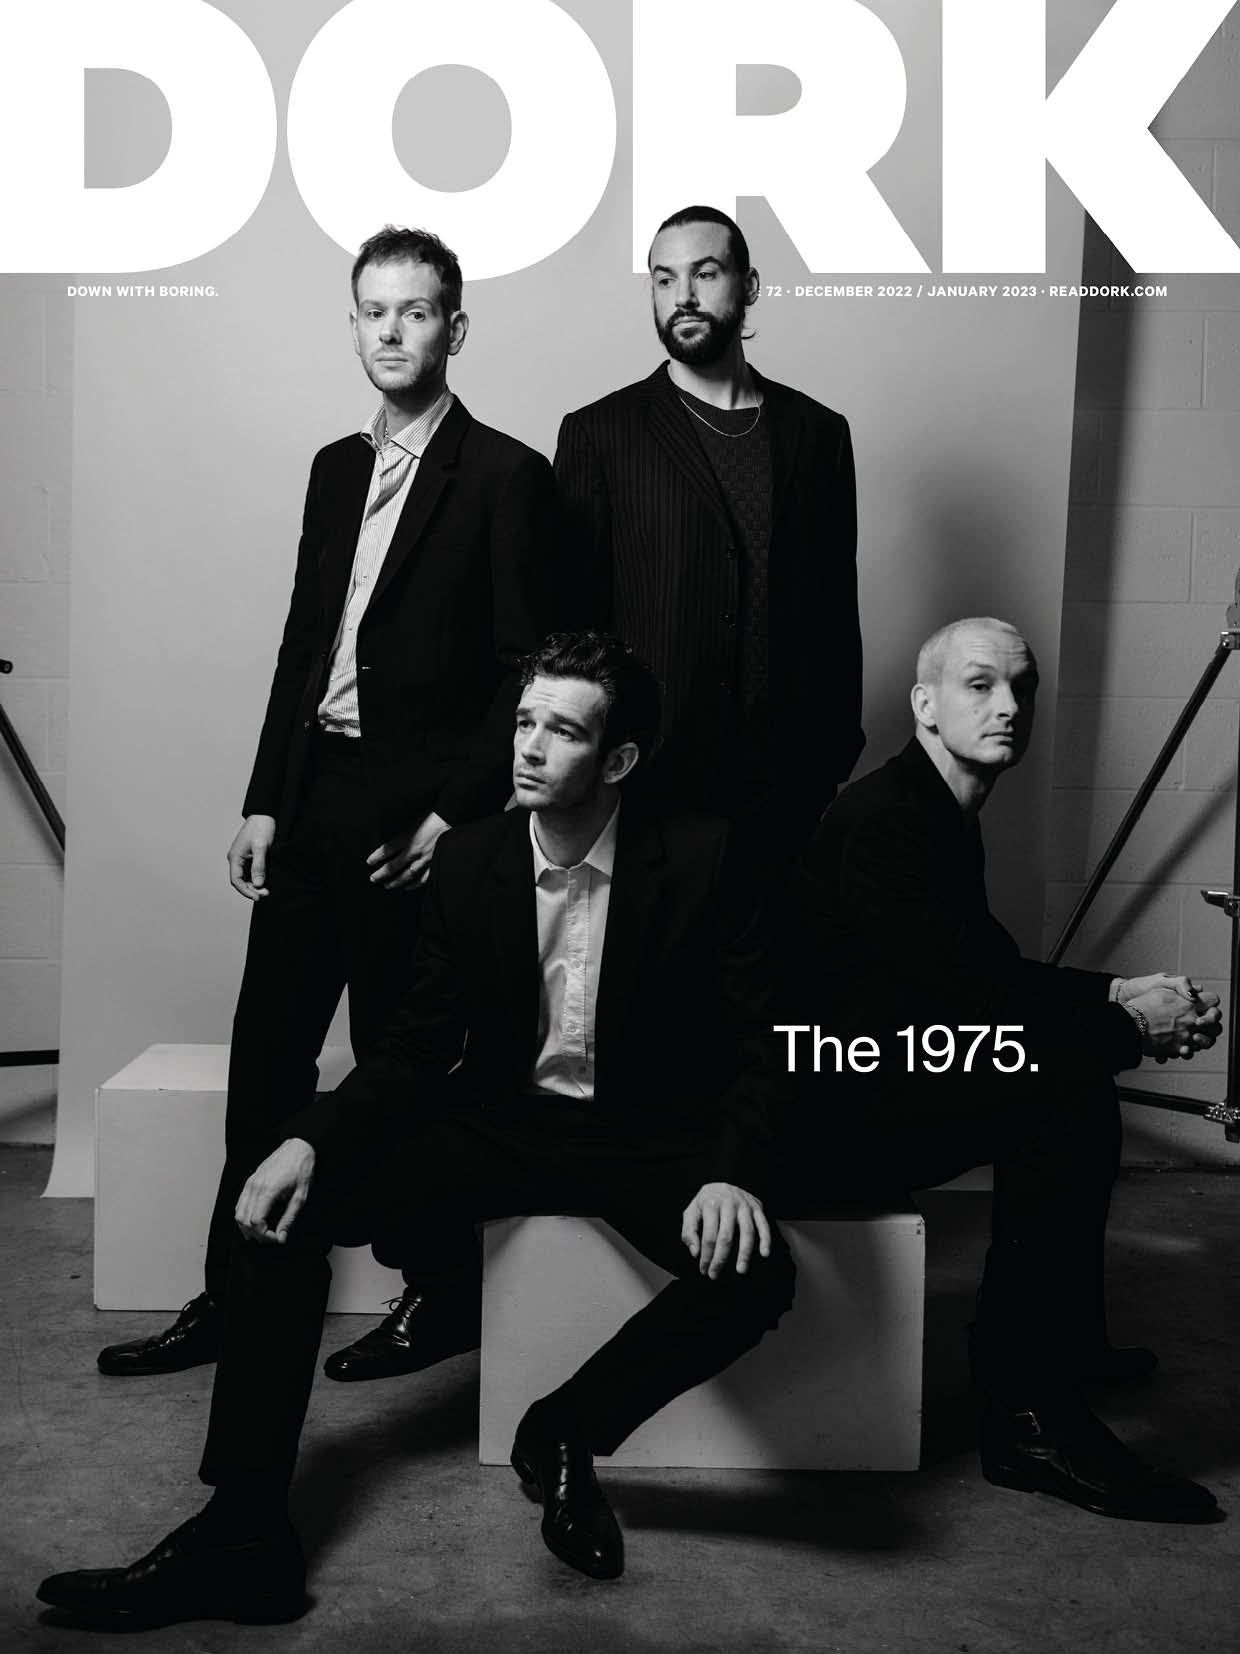 Dork, October 2022 (Louis Tomlinson cover) by Dork - Issuu